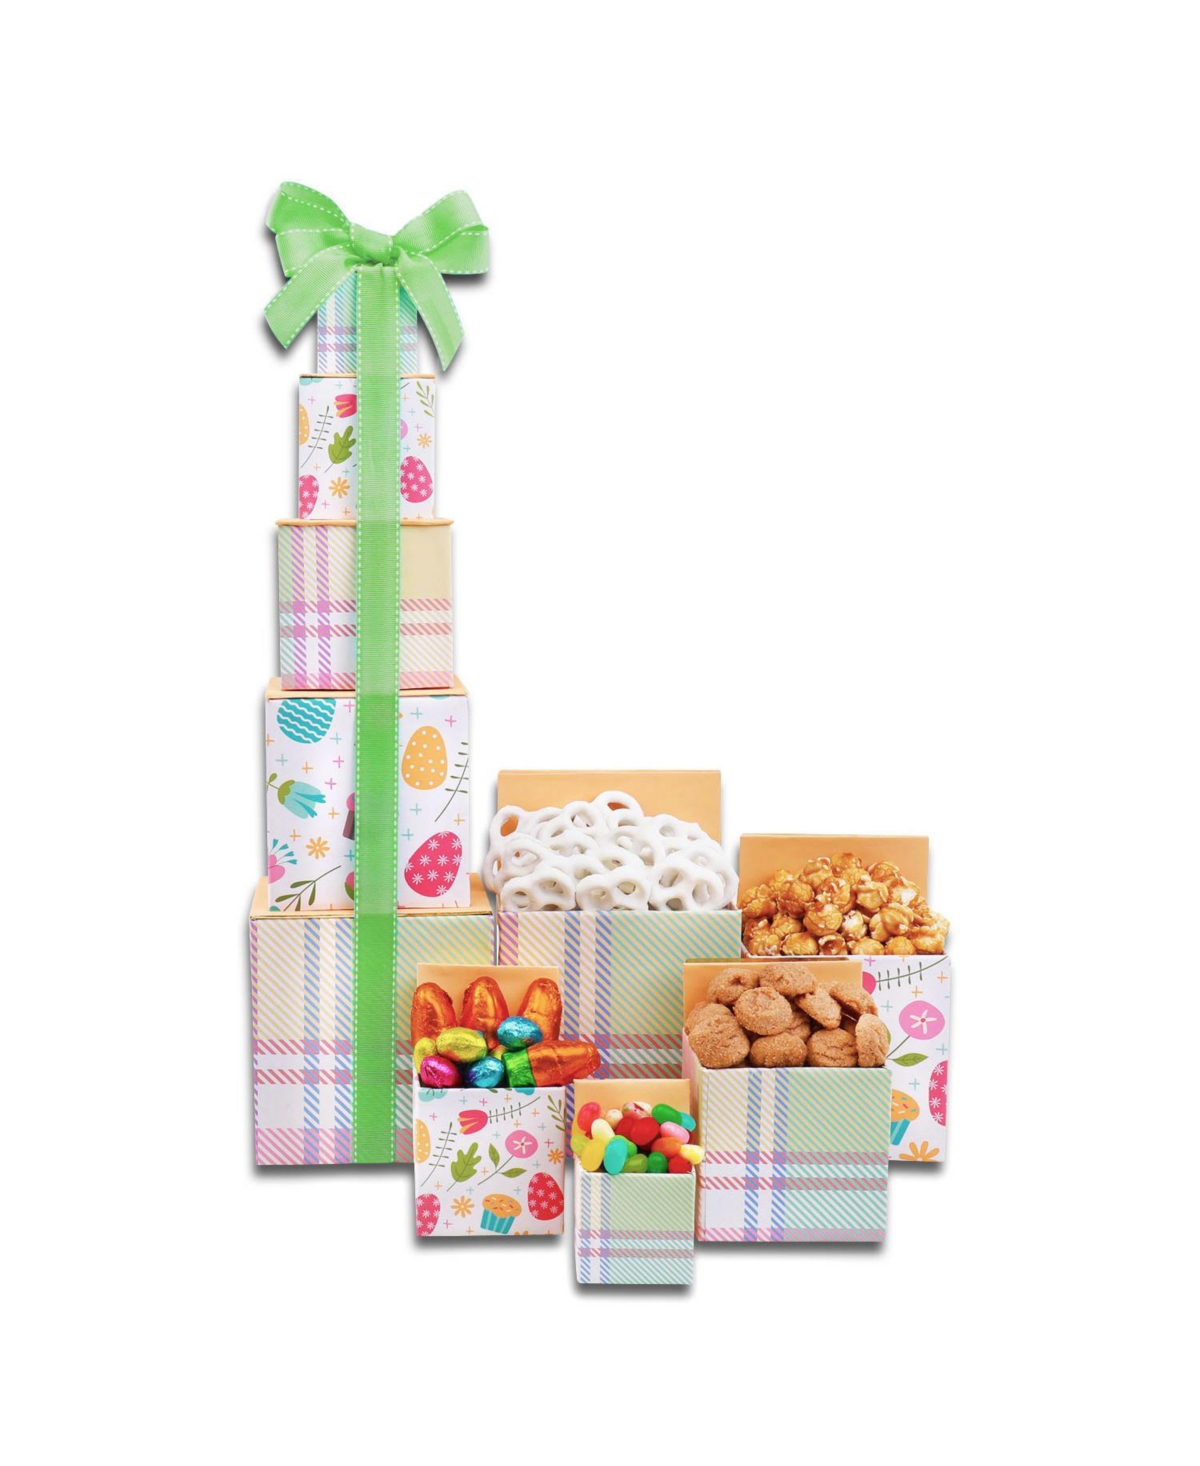 Alder Creek Gift Baskets Egg-cellent Candy And Treats Easter Tower Gift Set, 6 Piece